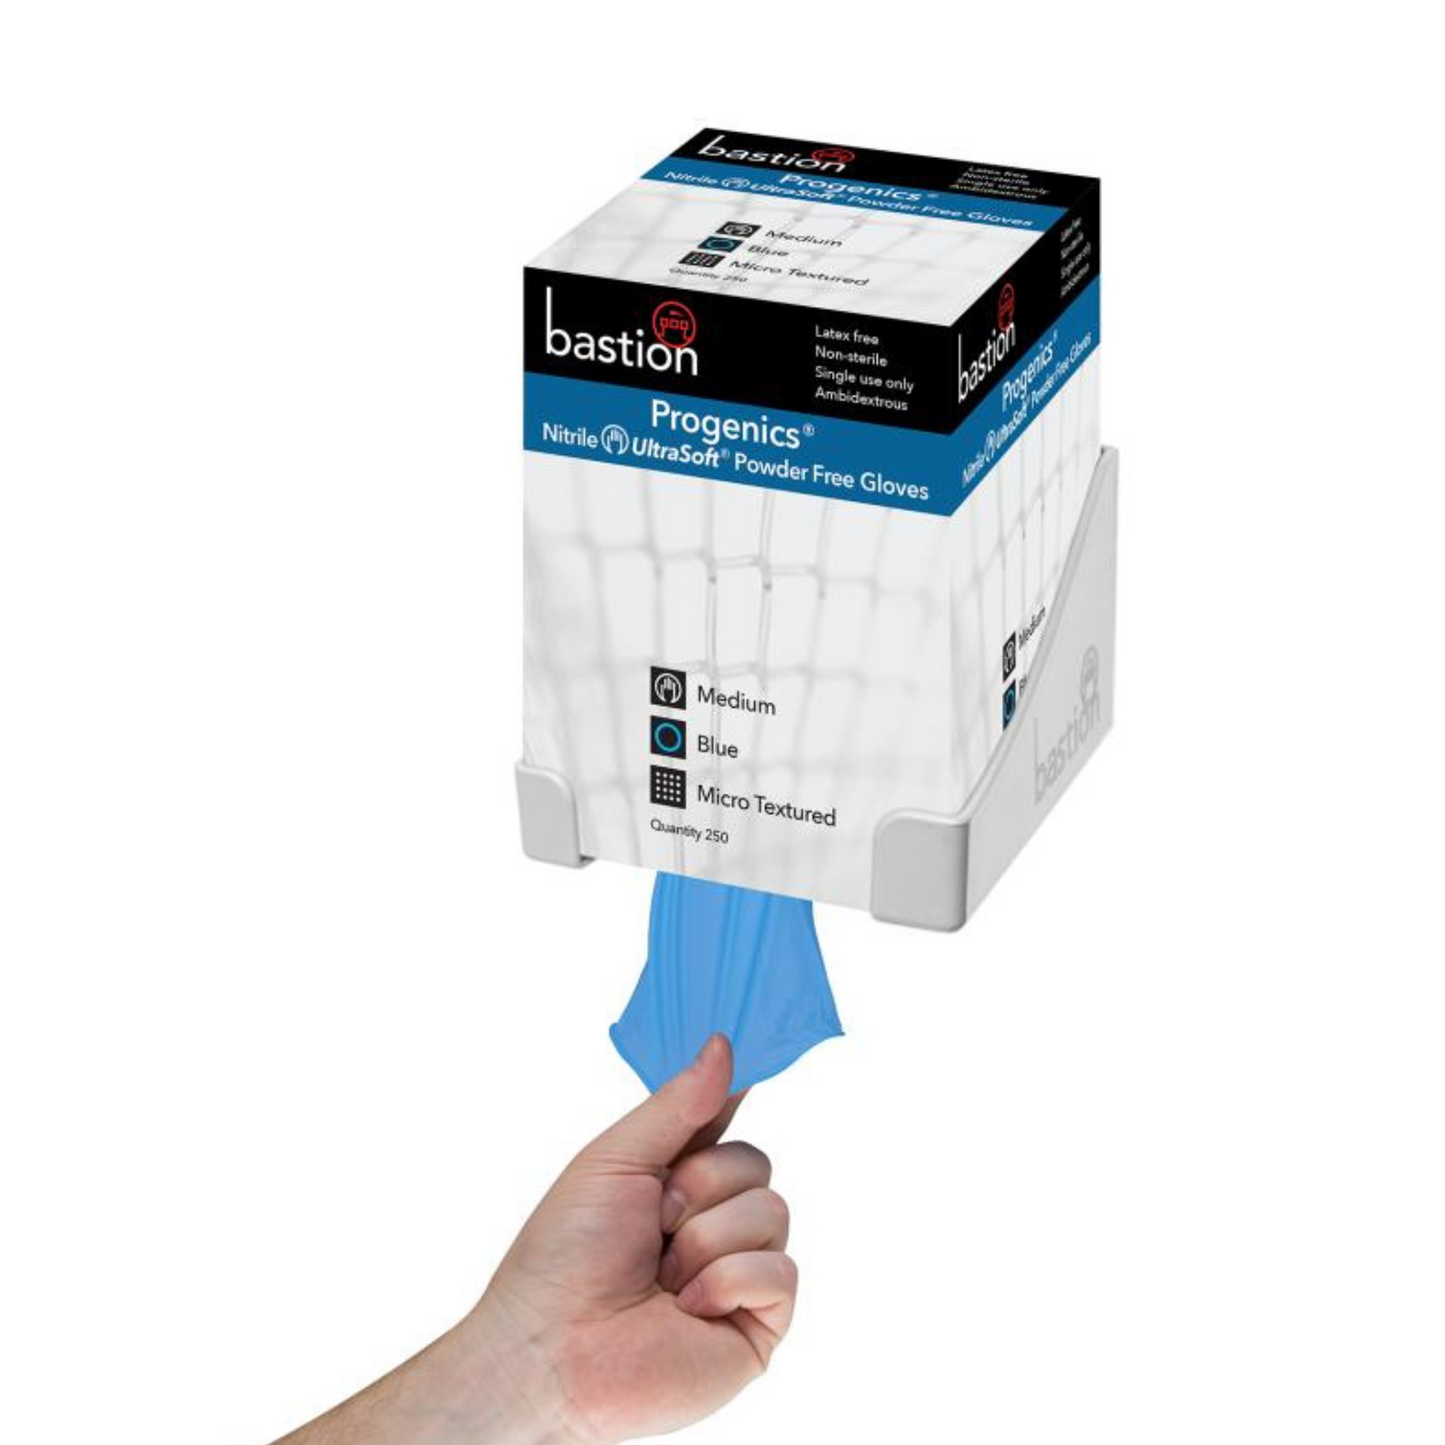 Bastion Nitrile UltraSoft Blue Powder Free Gloves Progenics Cuff First Dispensing System - S Carton (2000pc)